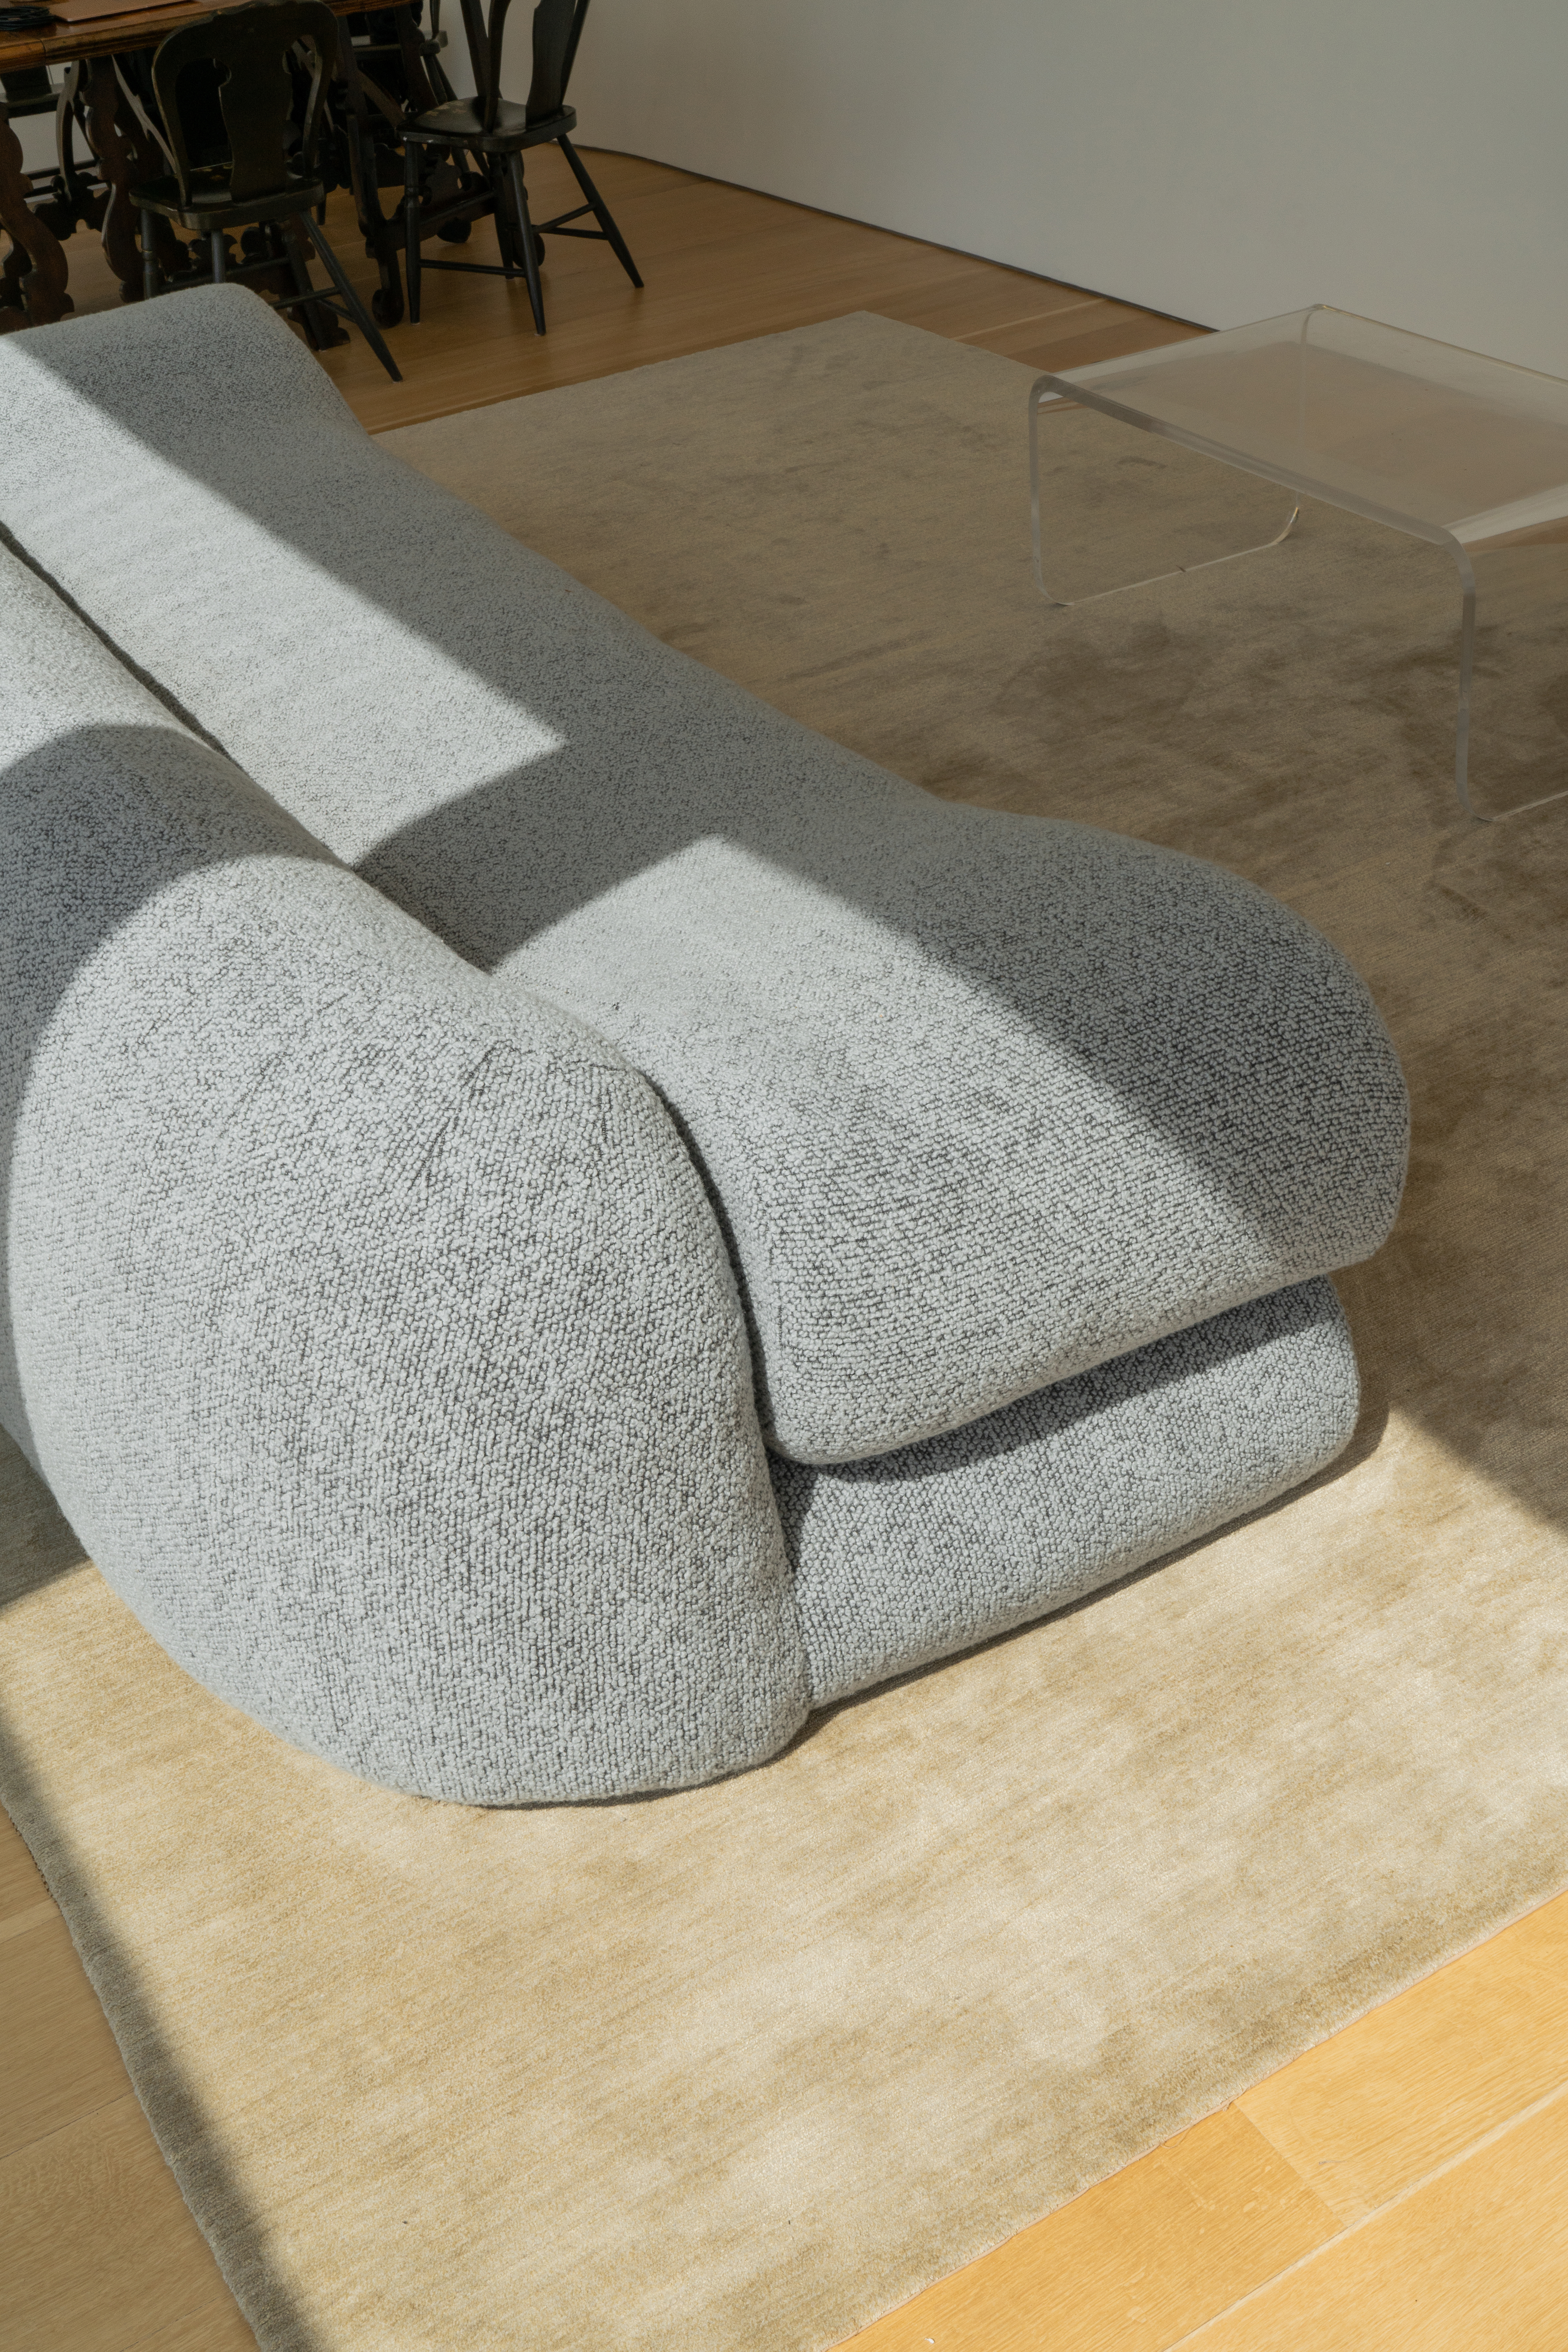 The Beanie Sofa by NEA Studio